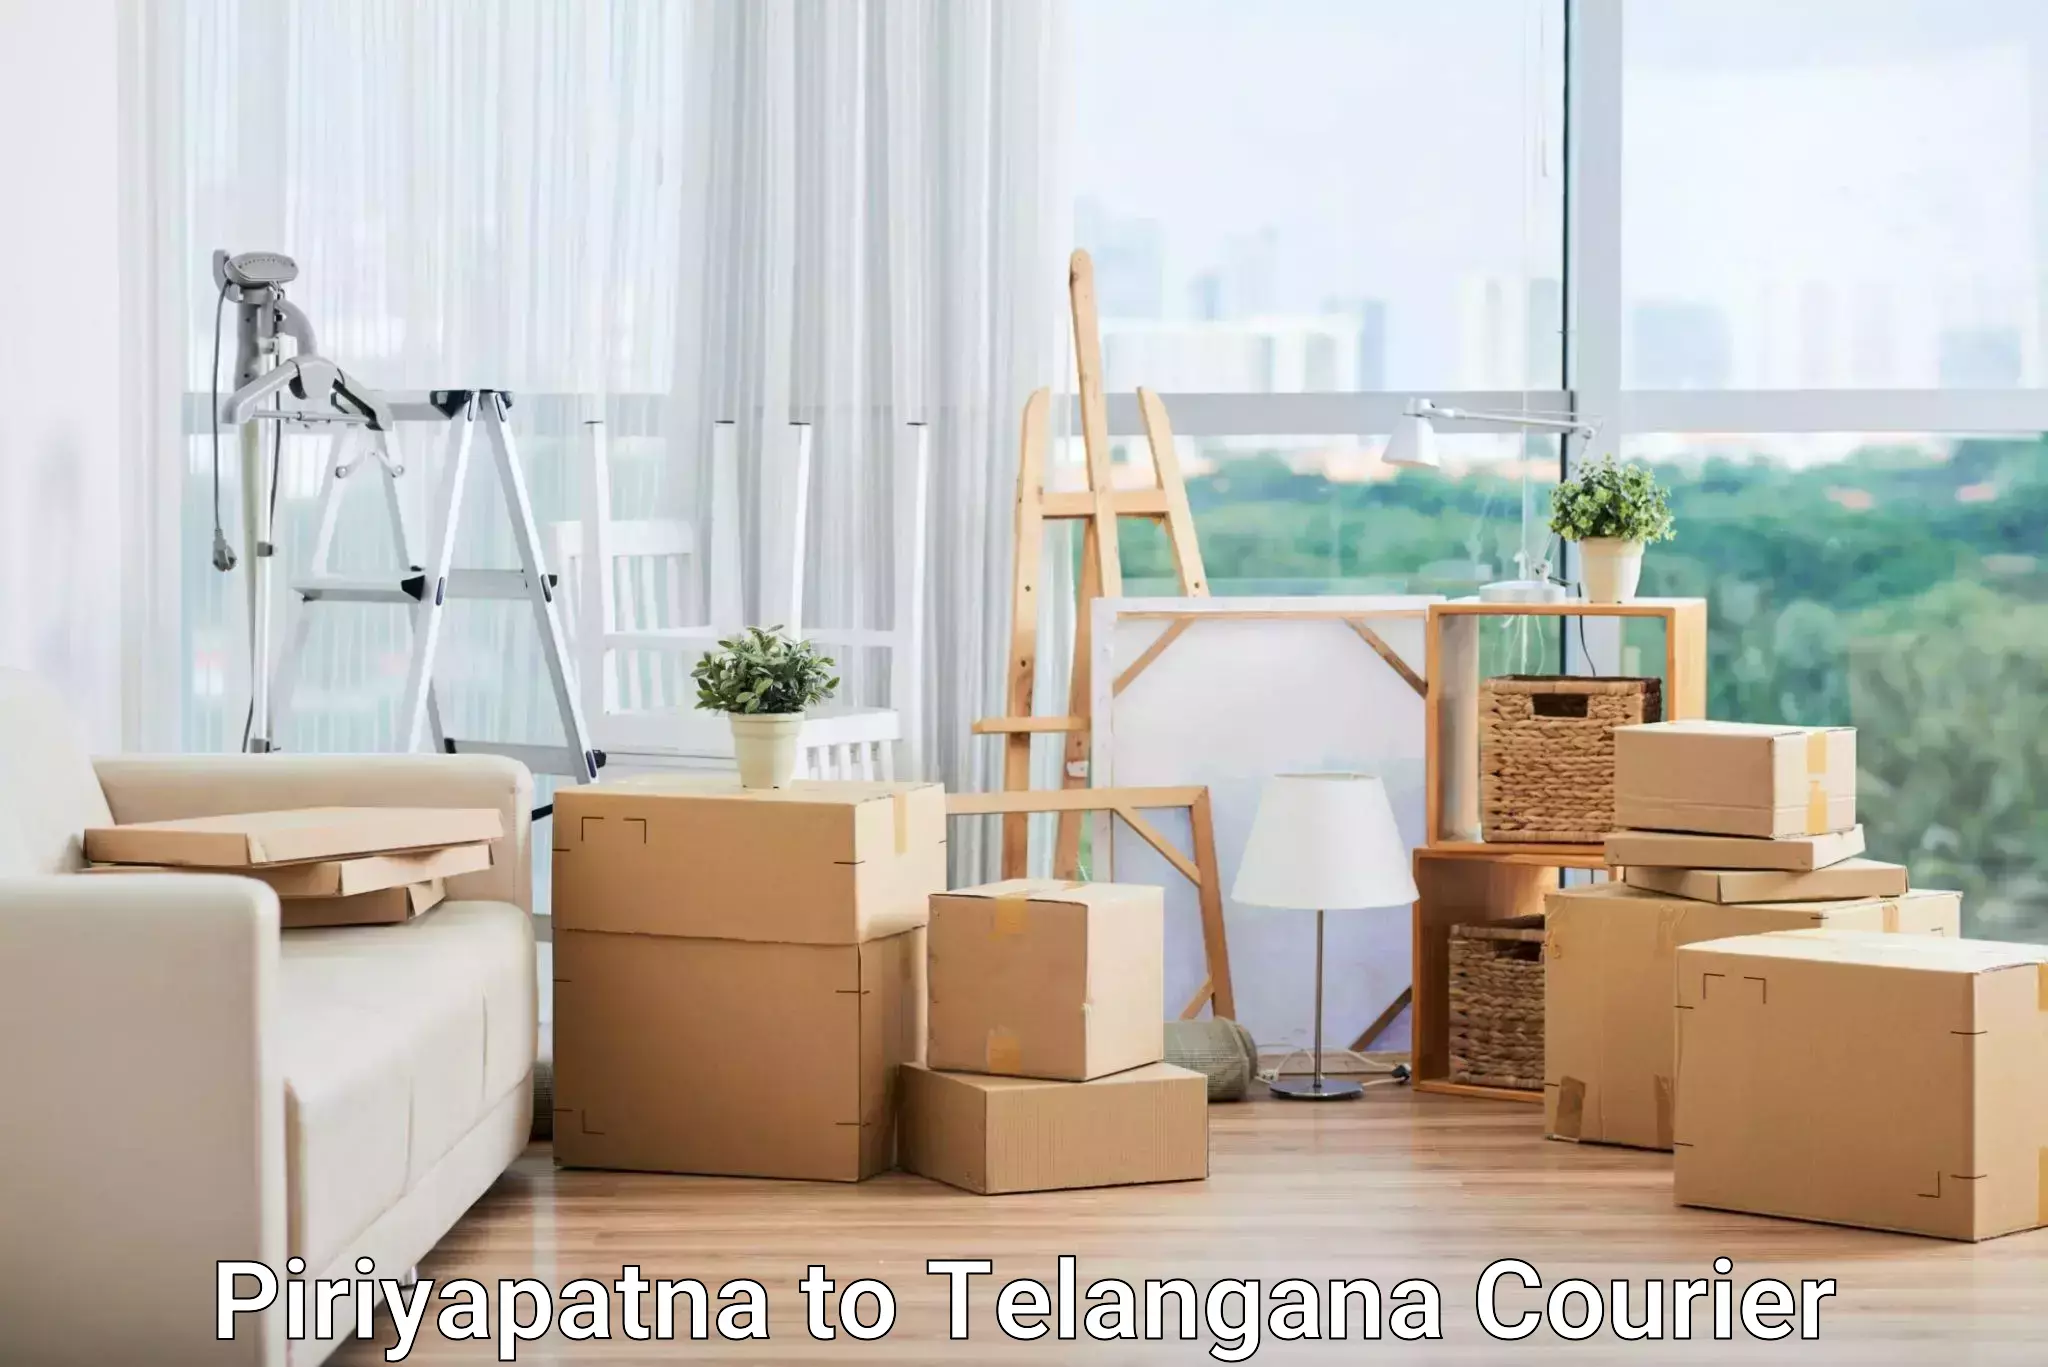 Diverse delivery methods Piriyapatna to Manneguda